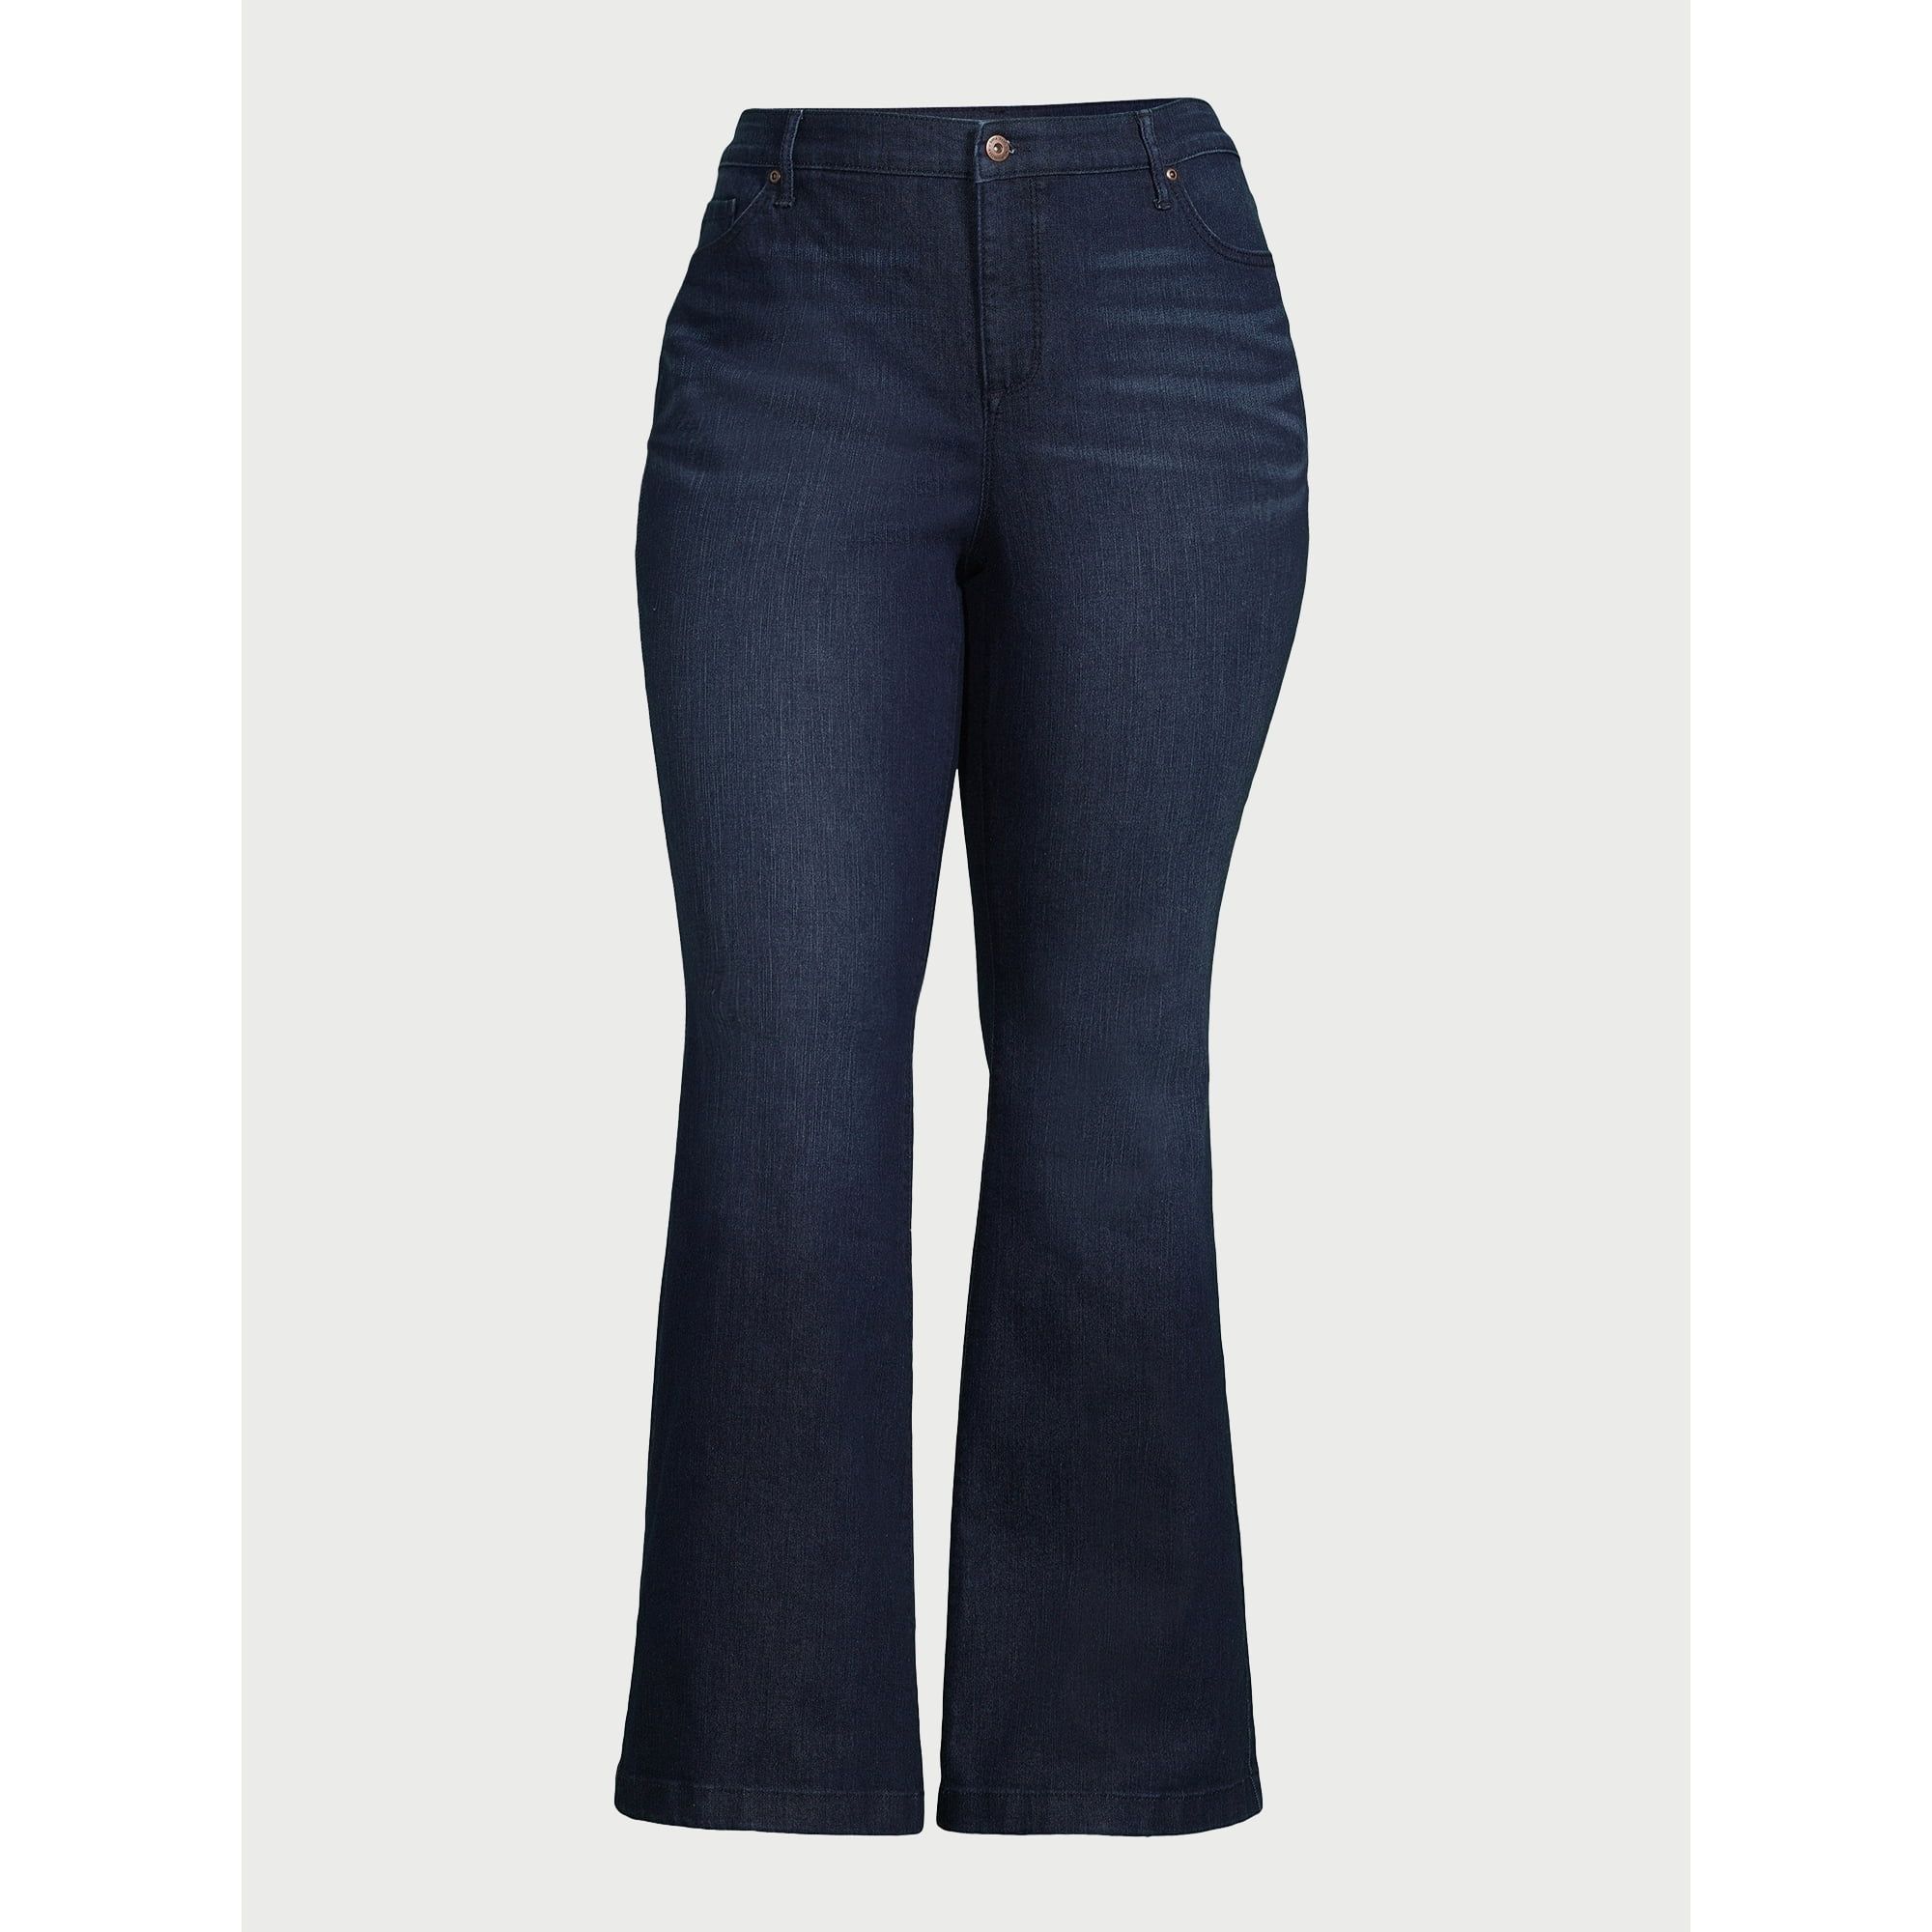 Sofia Jeans Women's Plus Size Curvy Melisa Flare High Rise Zip Fly Jeans | Walmart (US)